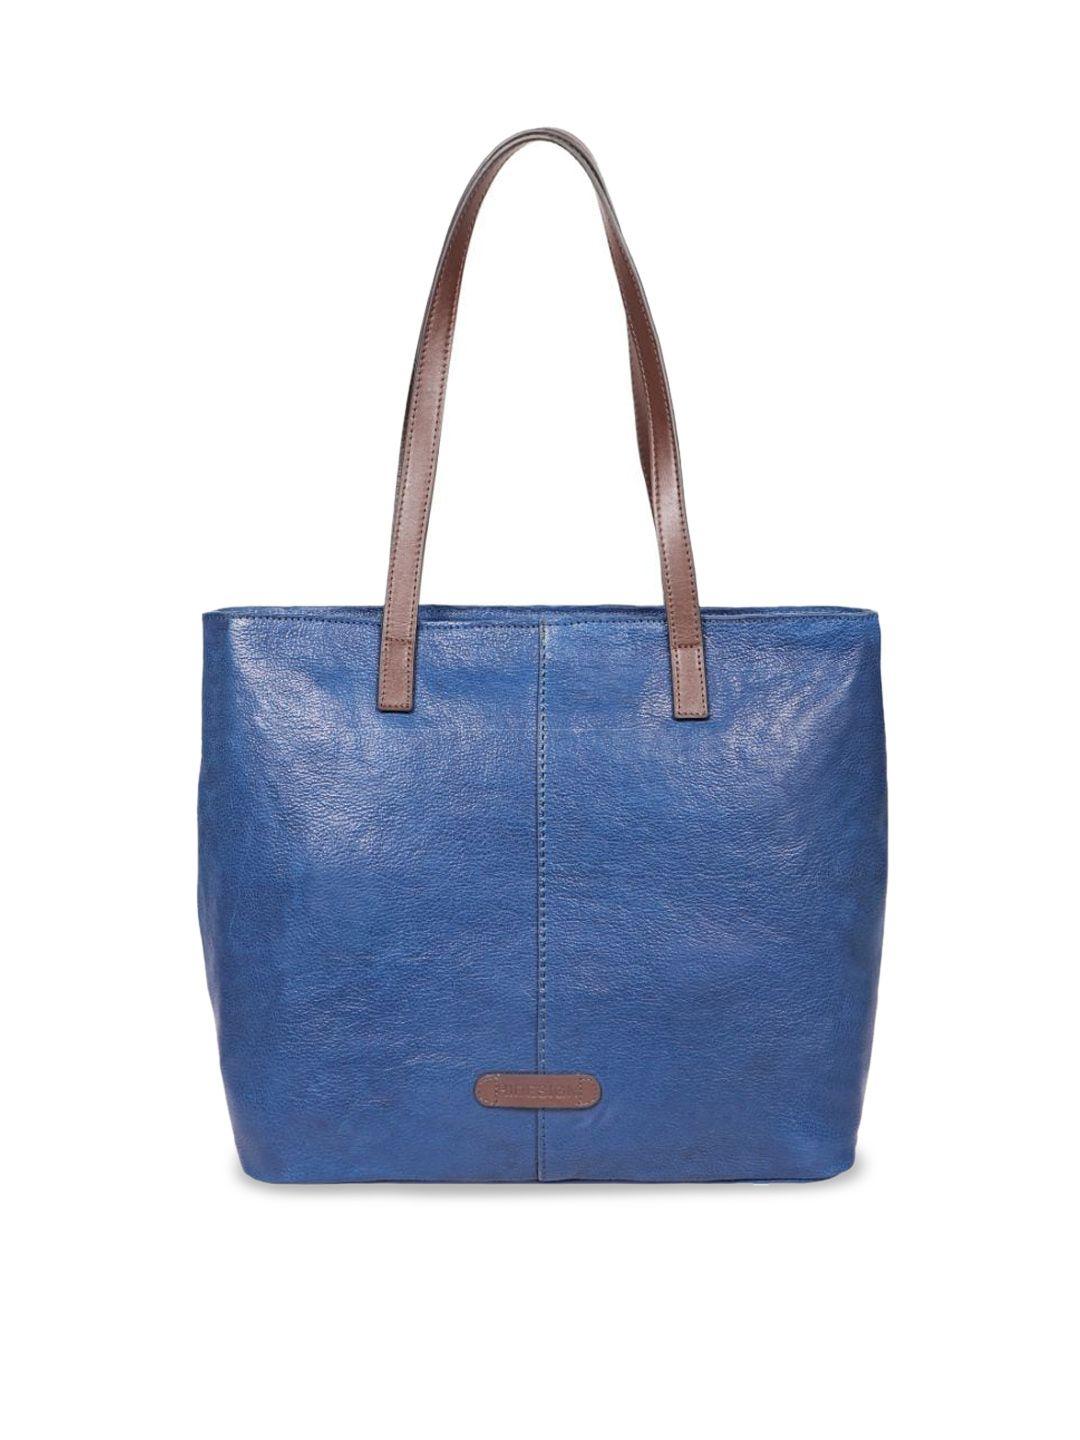 hidesign women  leather oversized shopper tote bag